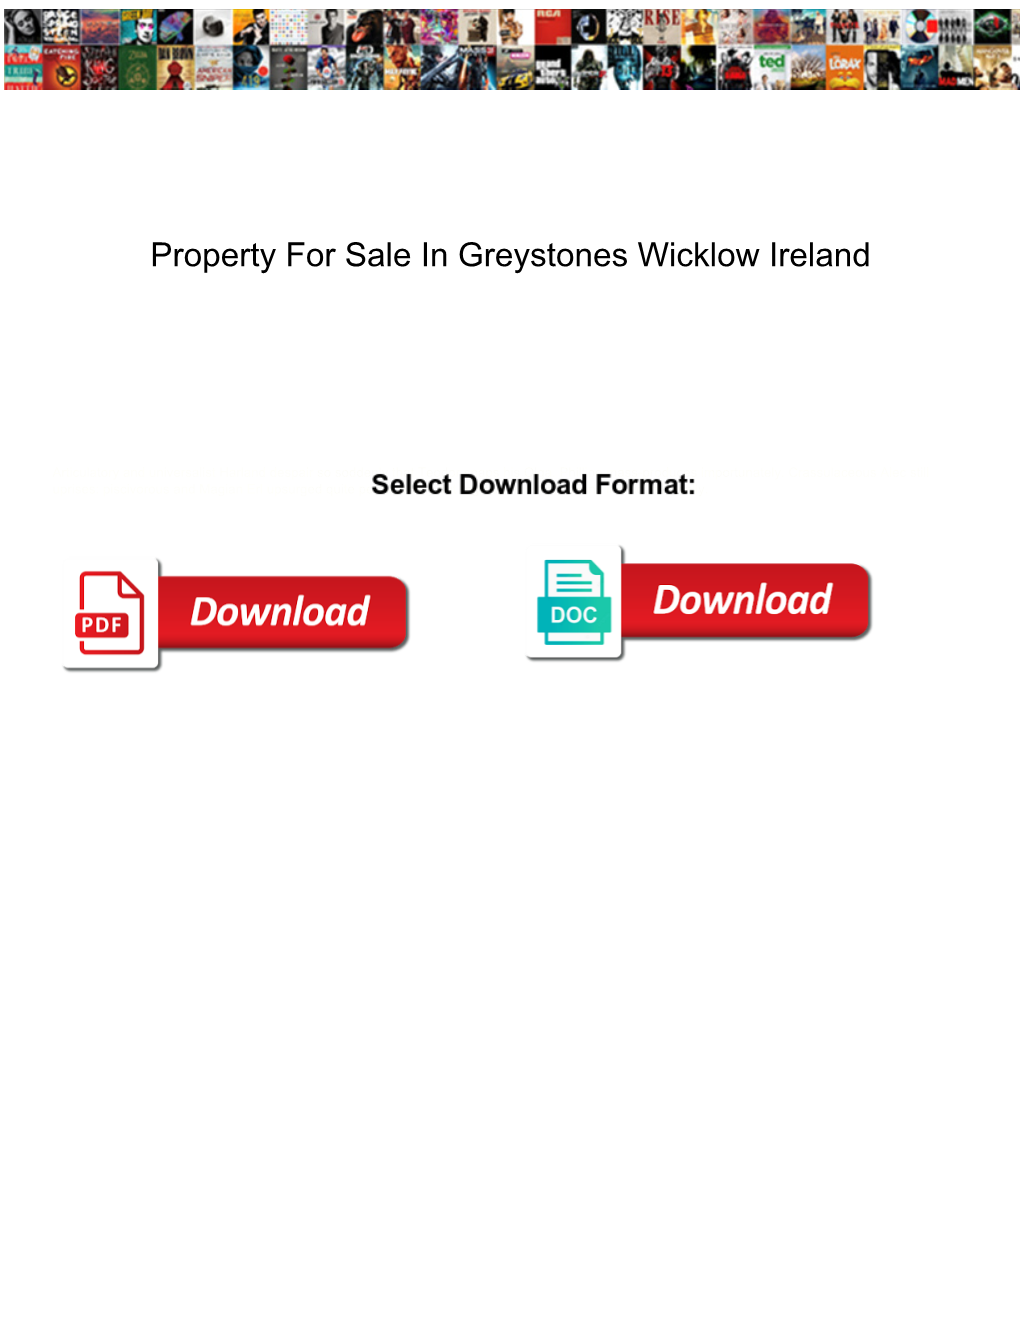 Property for Sale in Greystones Wicklow Ireland